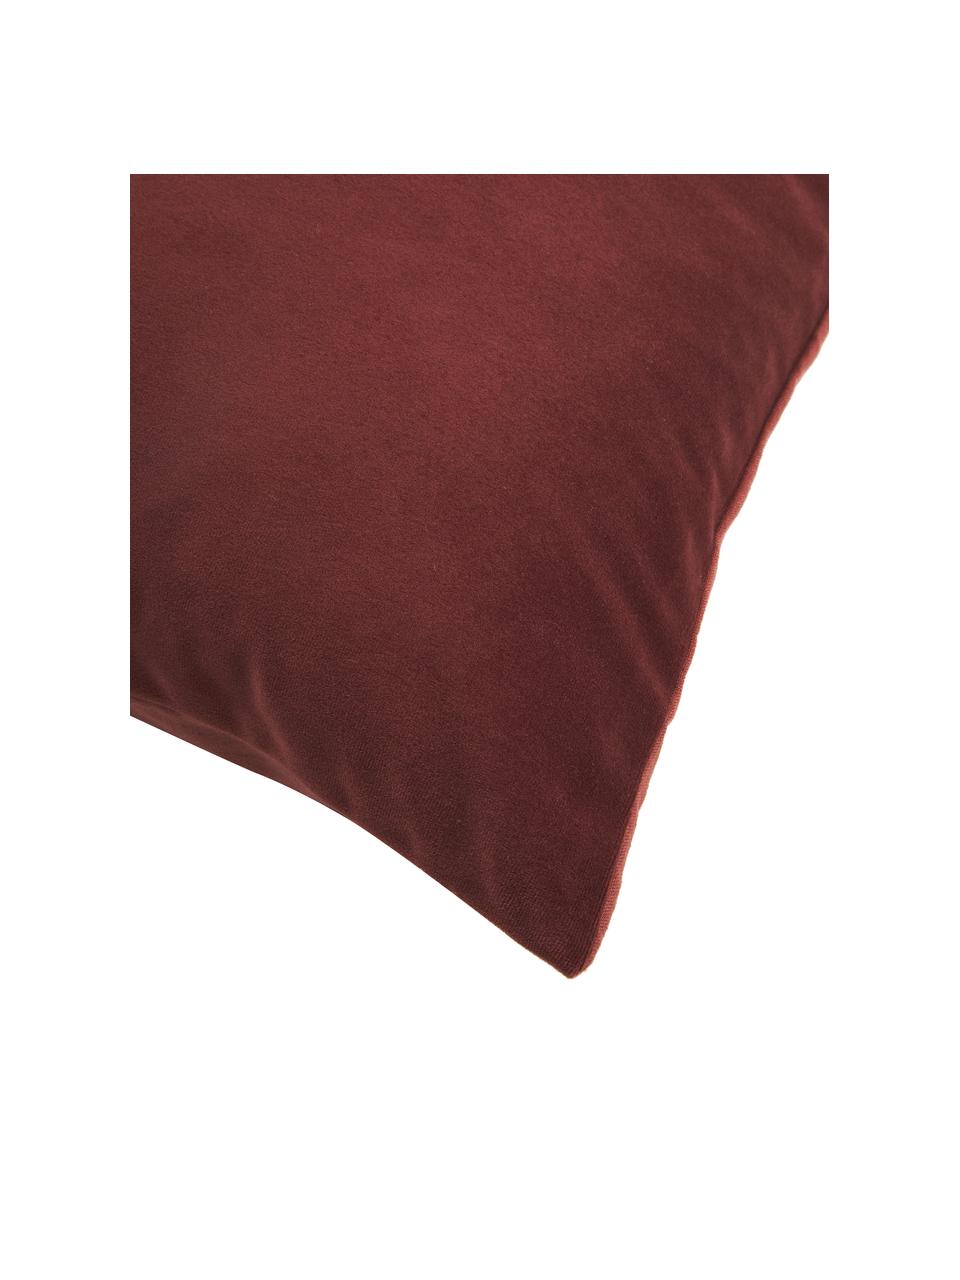 Federa arredo in velluto/lino rosso Adelaide, Rosso, Larg. 45 x Lung. 45 cm